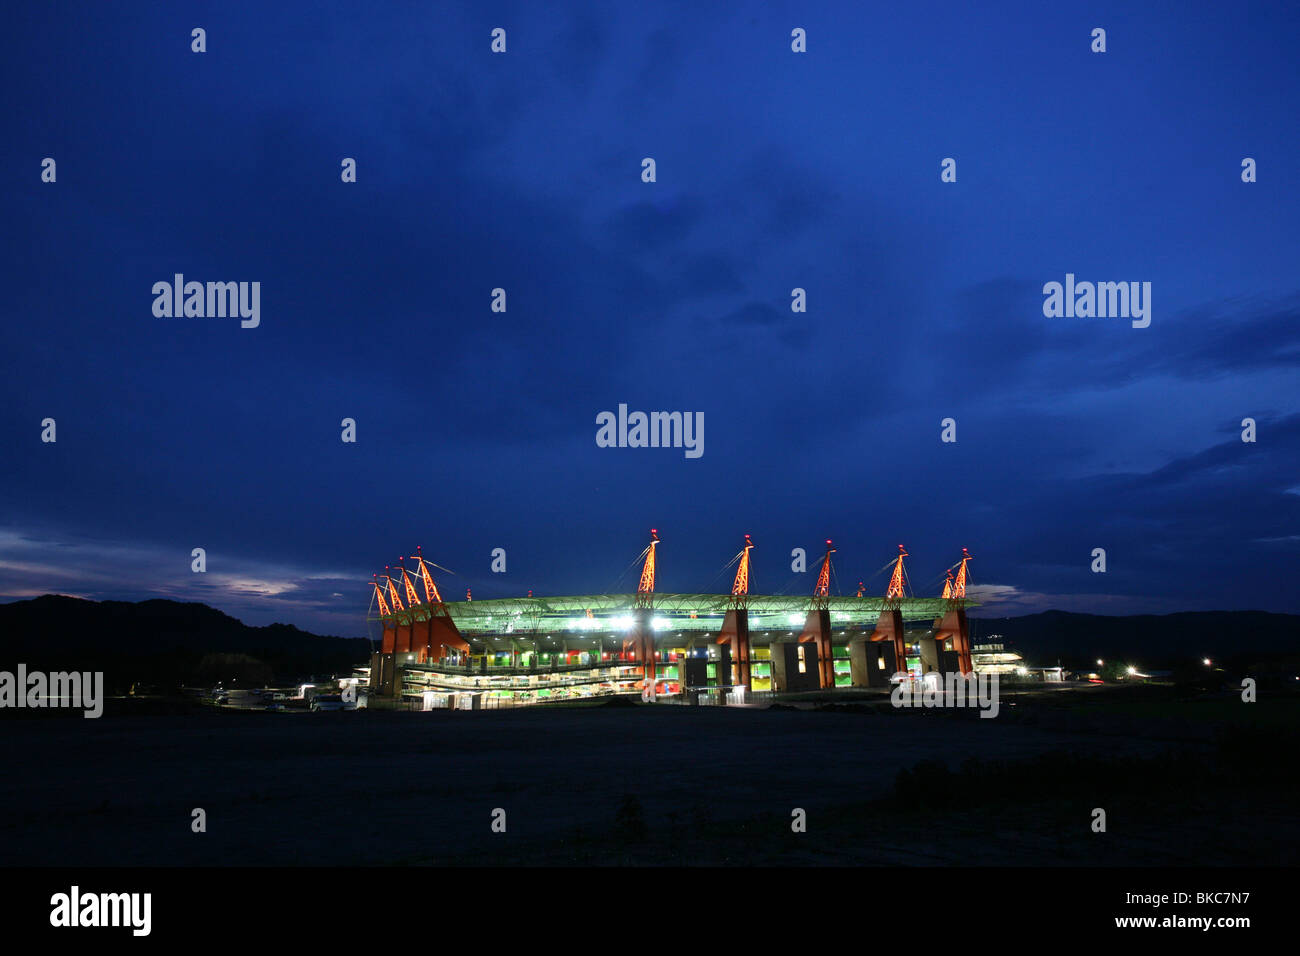 Mbombela stadium at night showing the giraffe-like structures holding up the roof Stock Photo